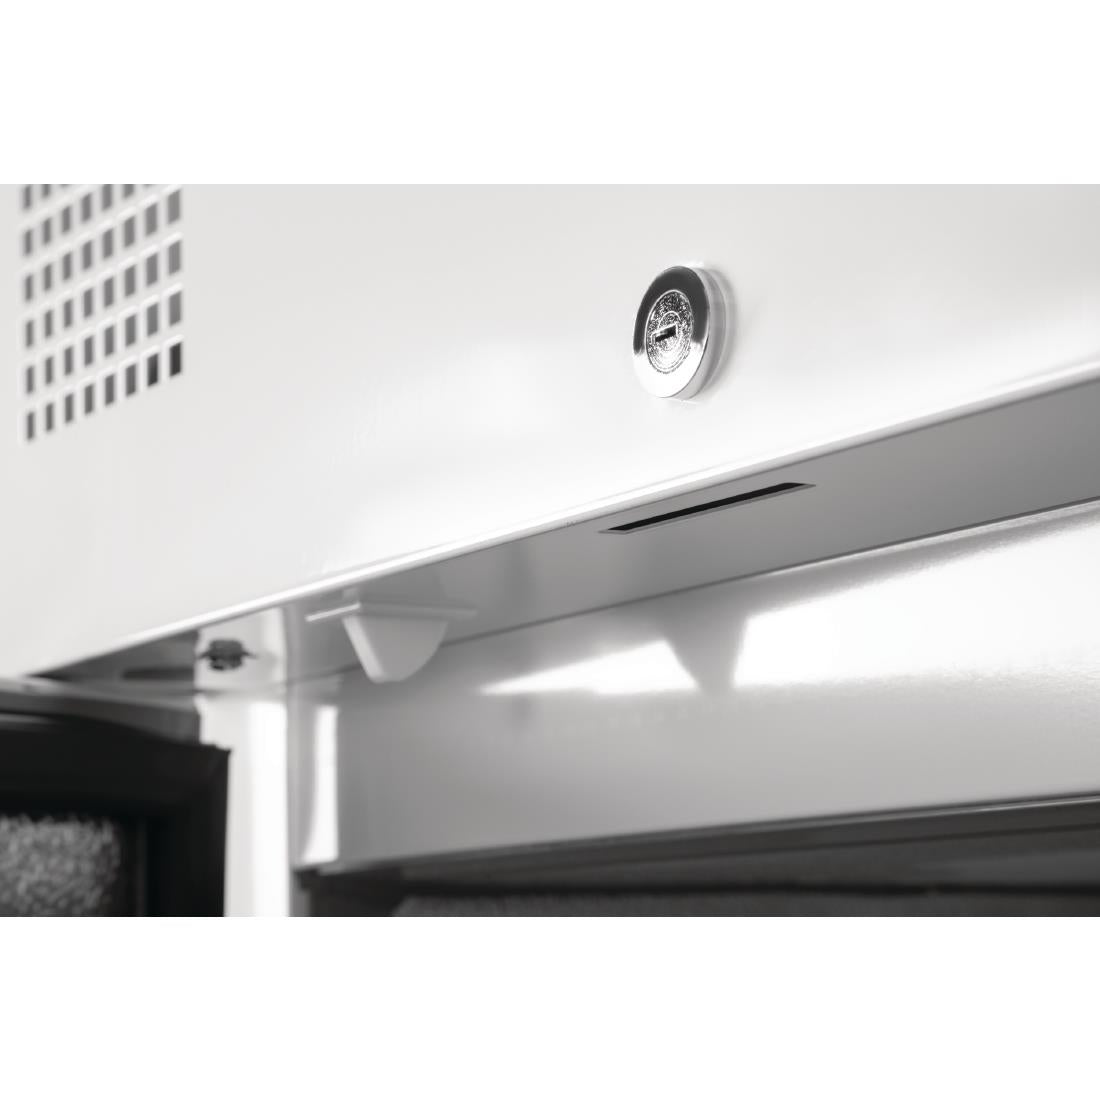 G593 Polar G-Series Upright Freezer 600Ltr JD Catering Equipment Solutions Ltd